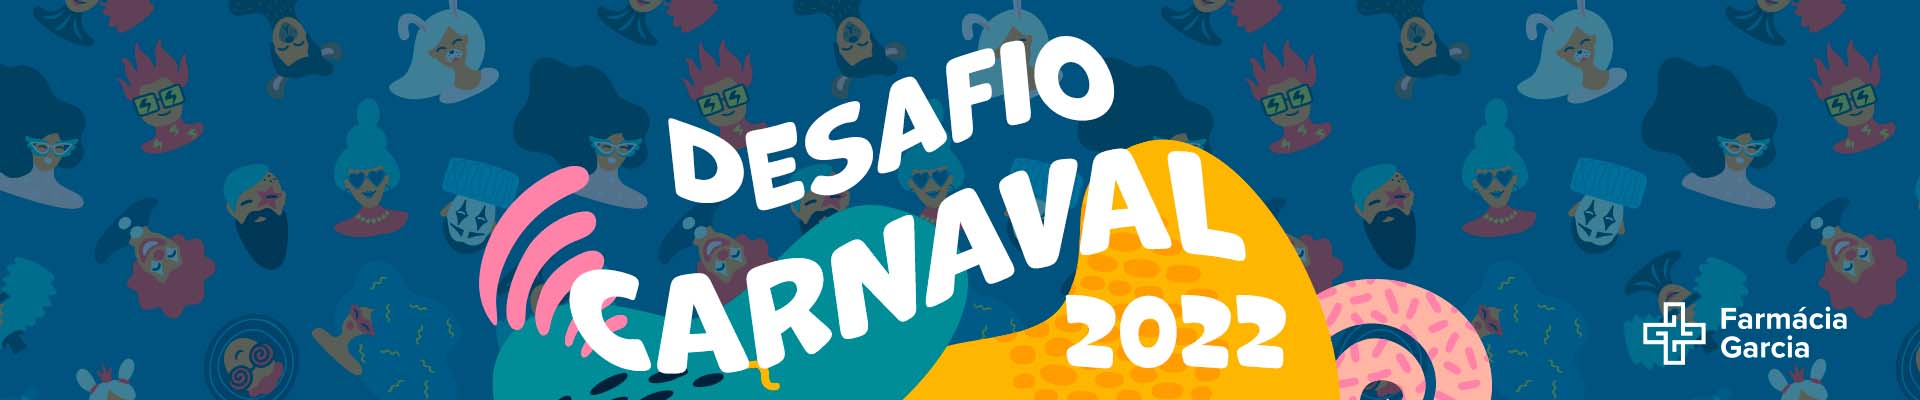 Desafio Carnaval Farmácia Garcia 2022